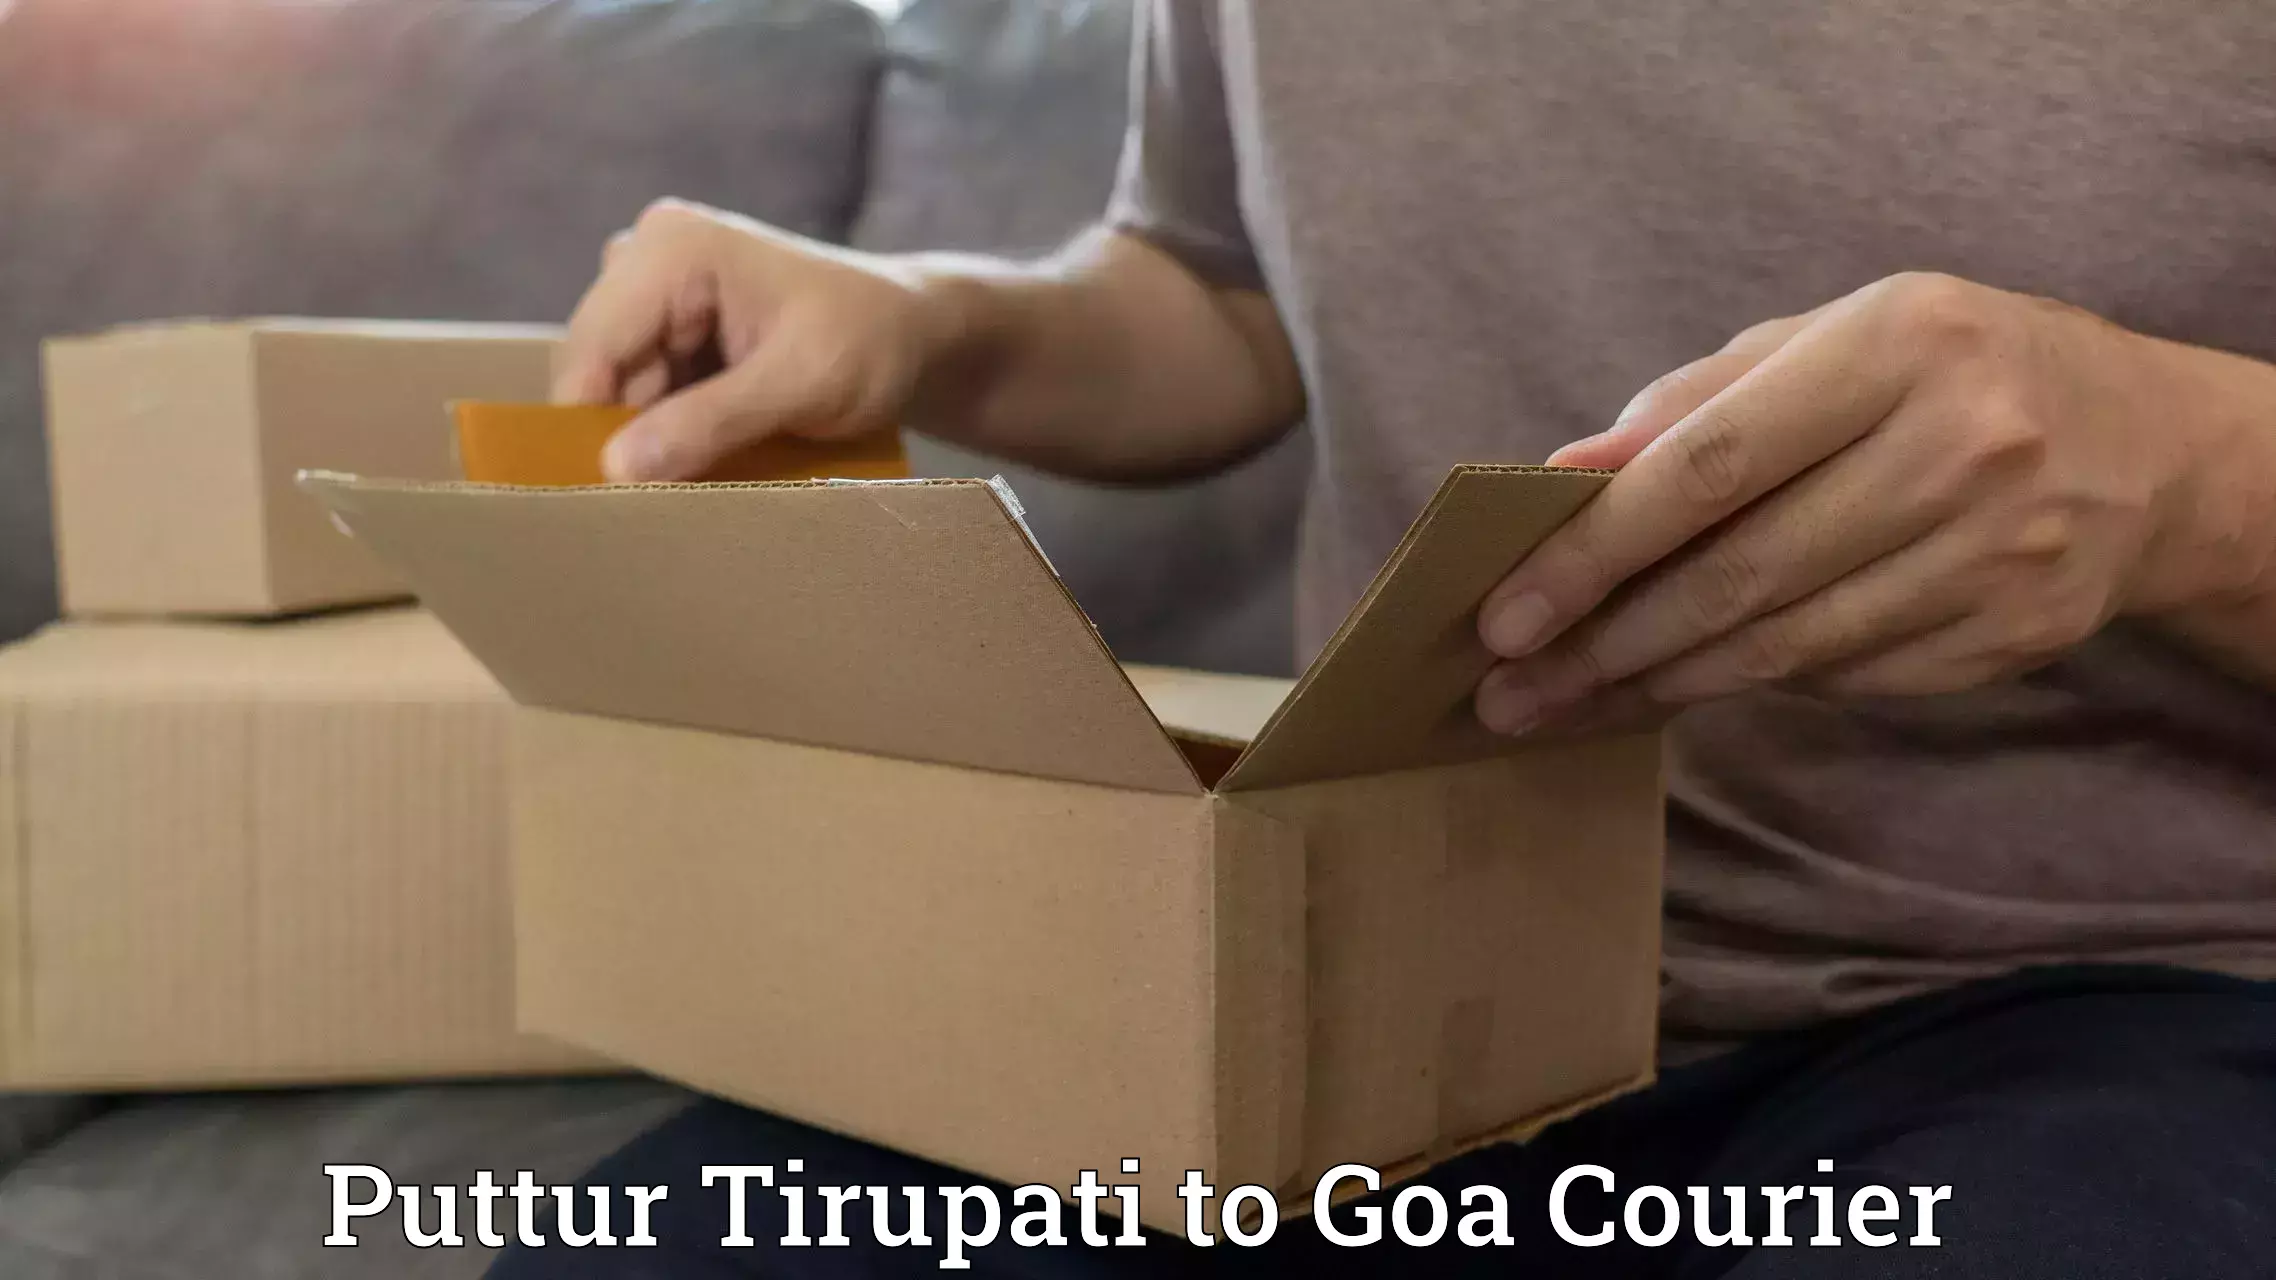 Customized delivery options Puttur Tirupati to Panaji